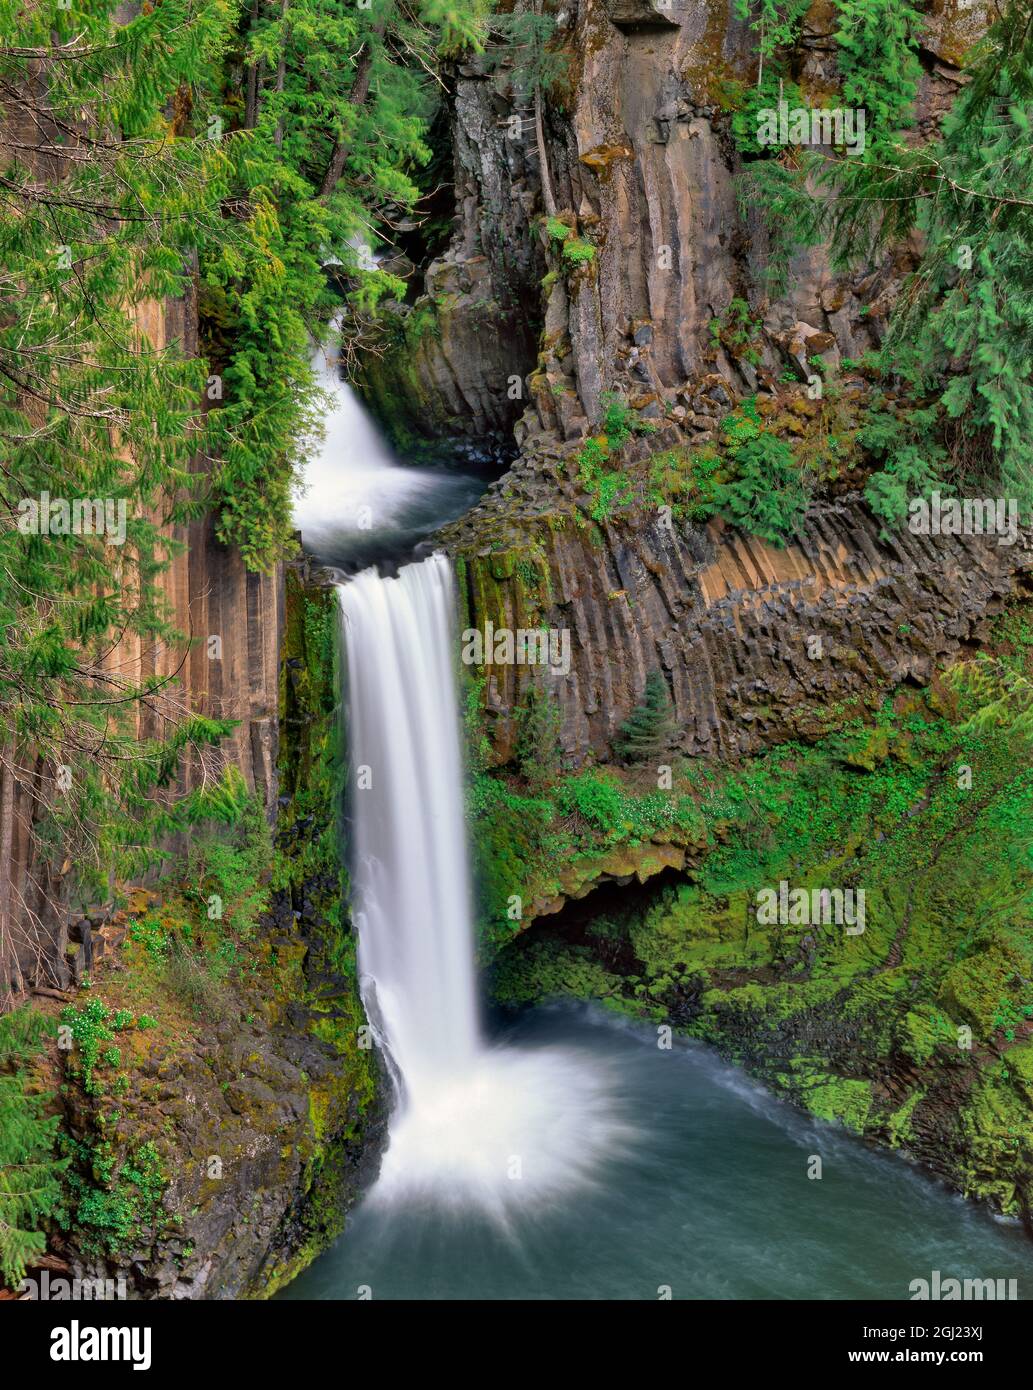 USA, Oregon, Umpqua National Forest. Toketee Falls landscape. Stock Photo